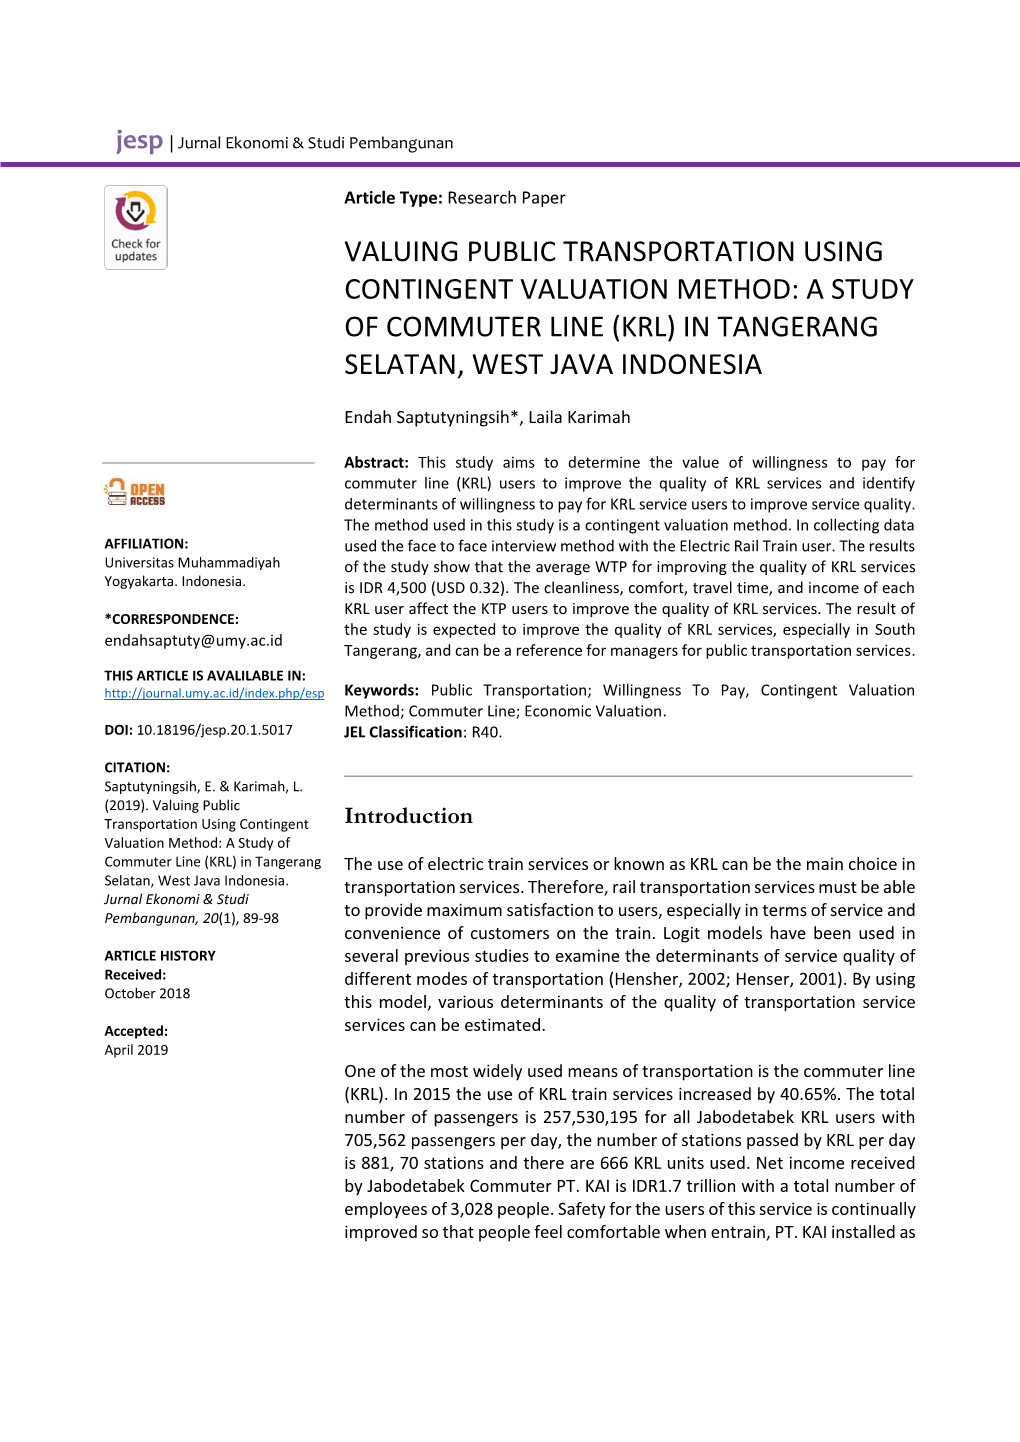 Valuing Public Transportation Using Contingent Valuation Method: a Study